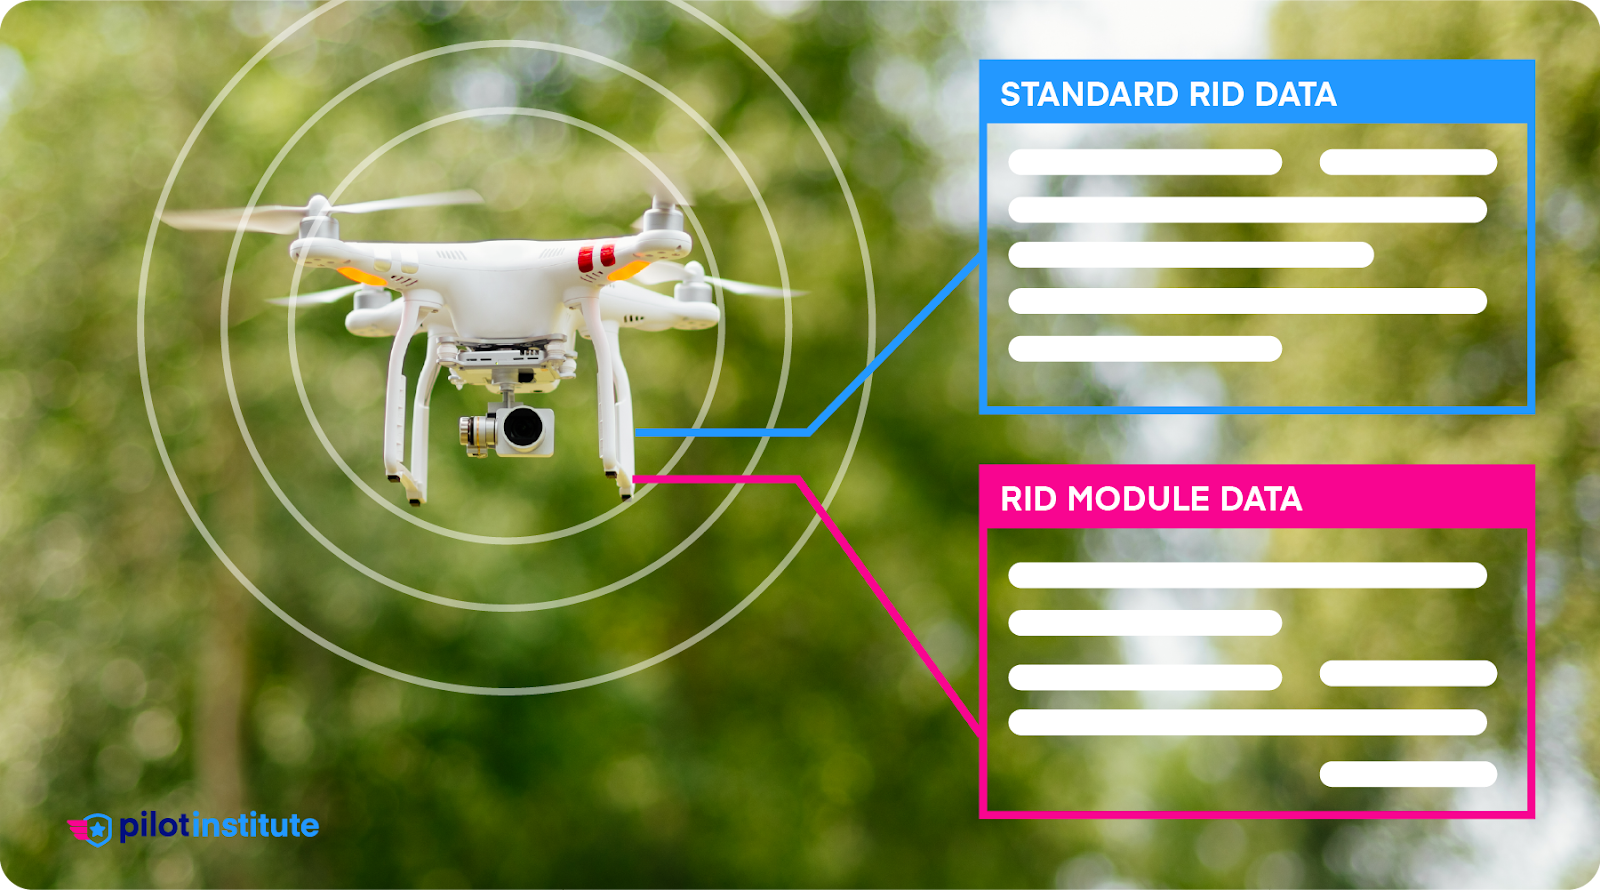 A drone broadcasting standard RID data or RID module data.